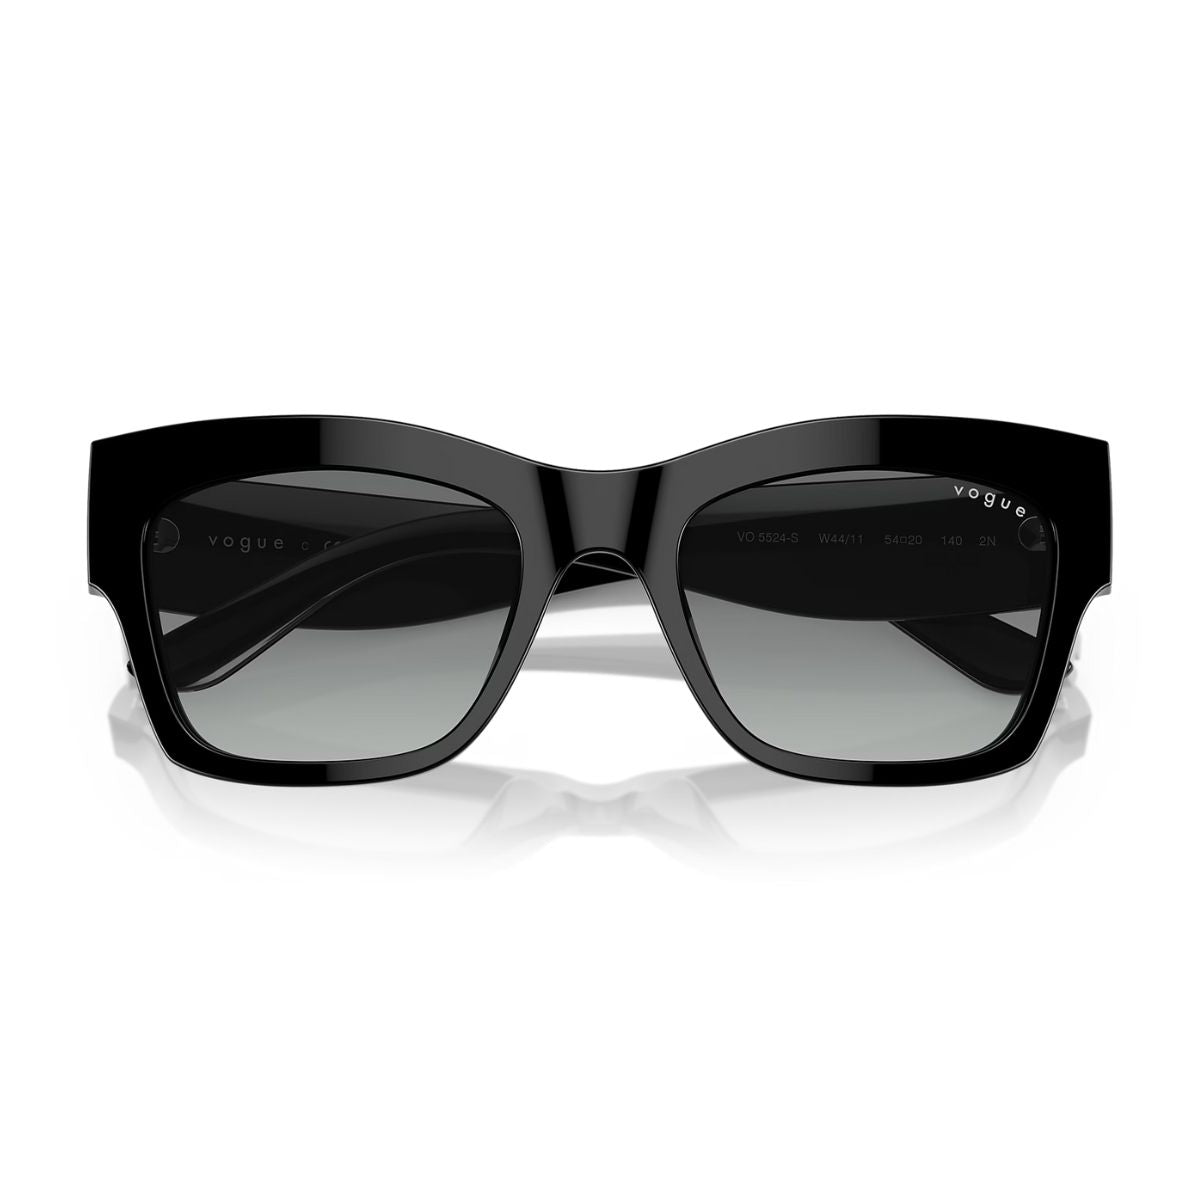 "Shop Stylish Vogue UV Protection Sunglasses For Ladies At Oinline Optorium"